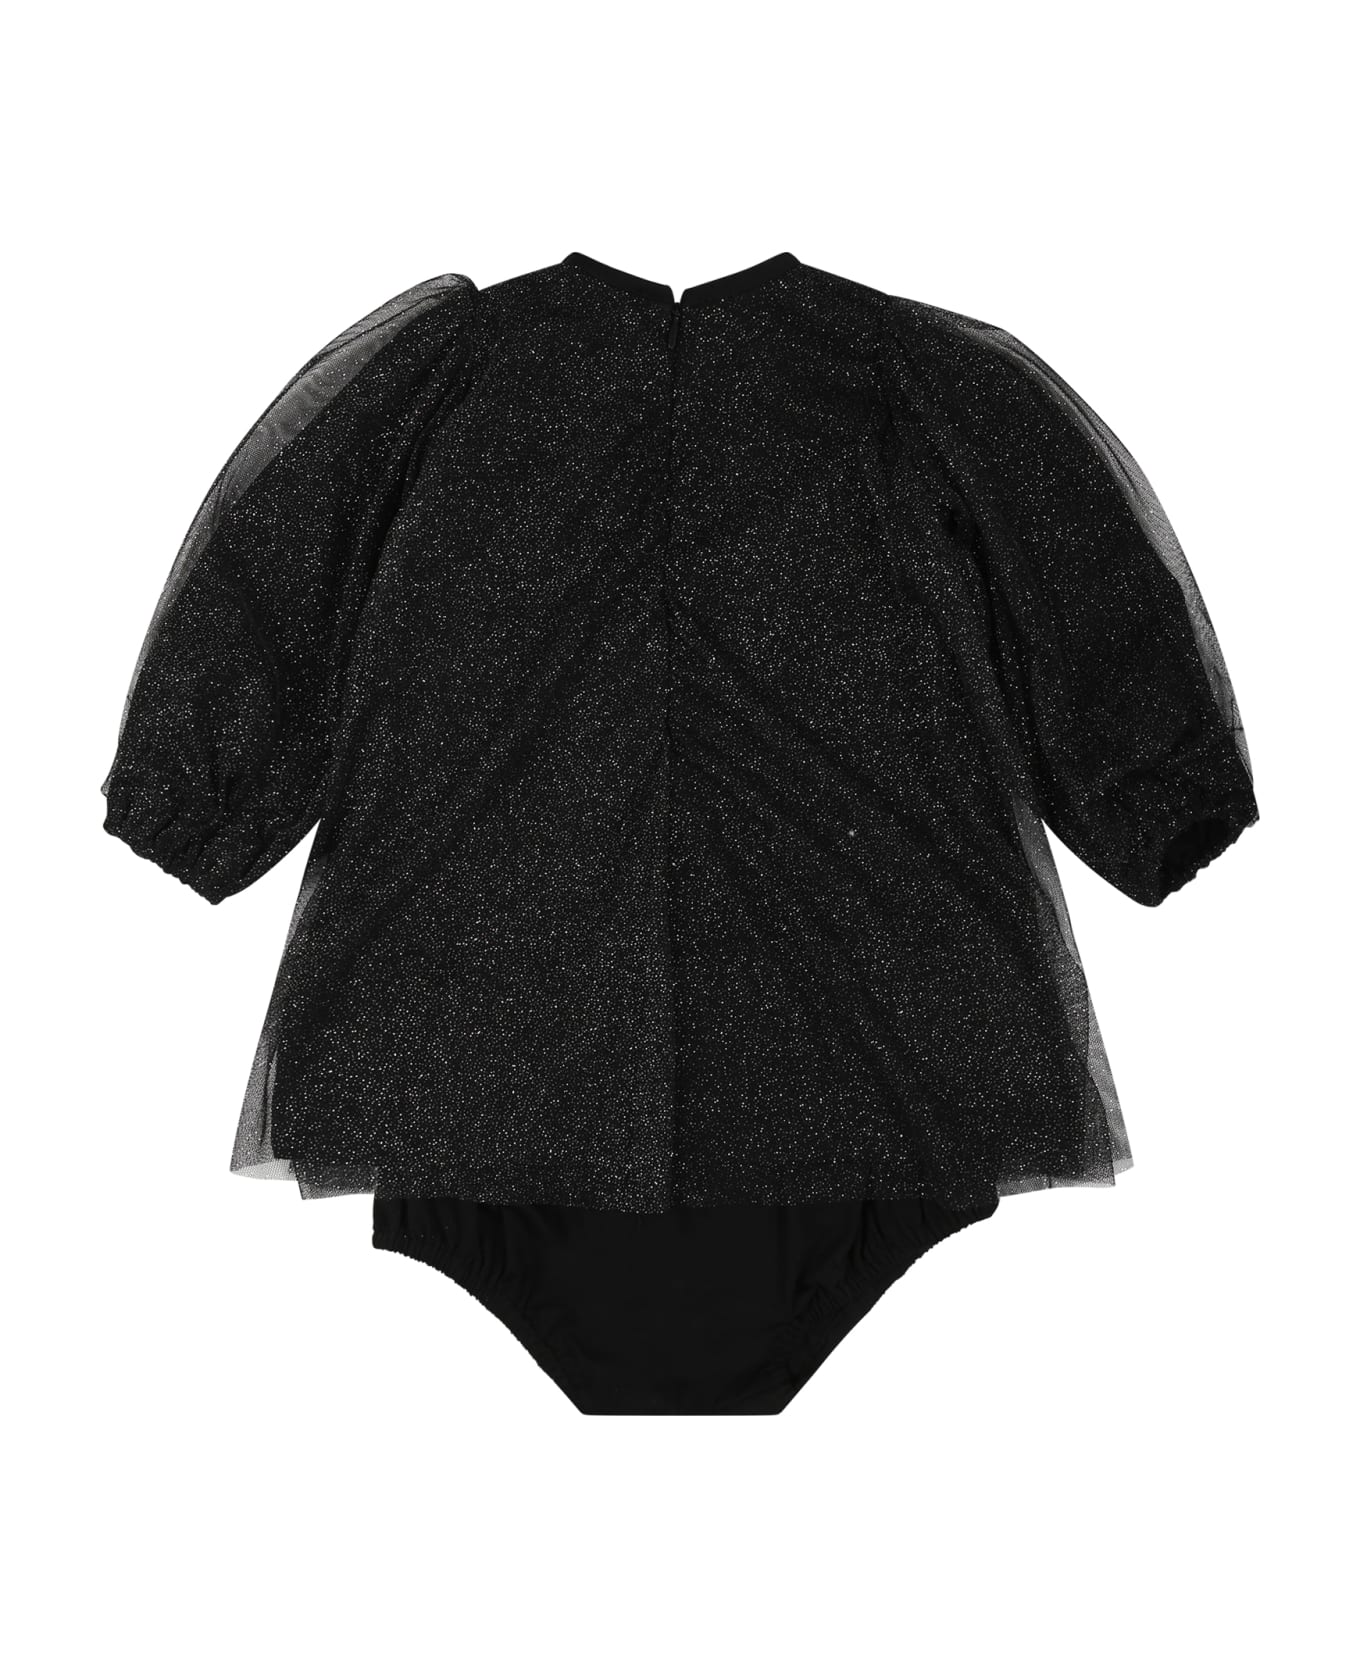 Balmain Black Dress For Baby Girl With Logo - Black